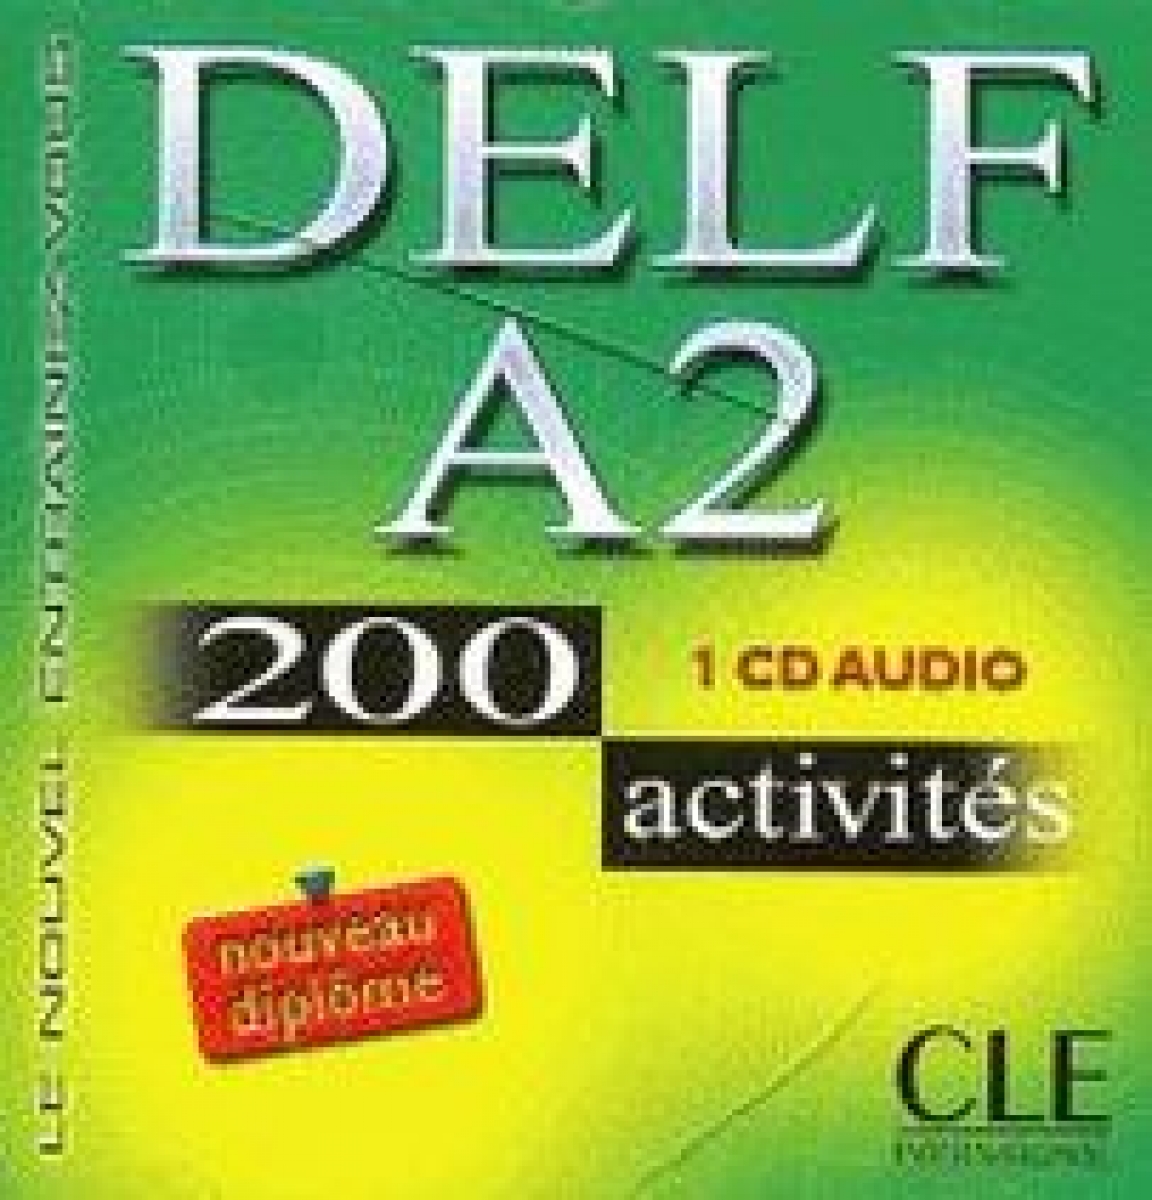 Pauline Vey, Emmanuel Gadet DELF A2 - CD audio - 200 activites 